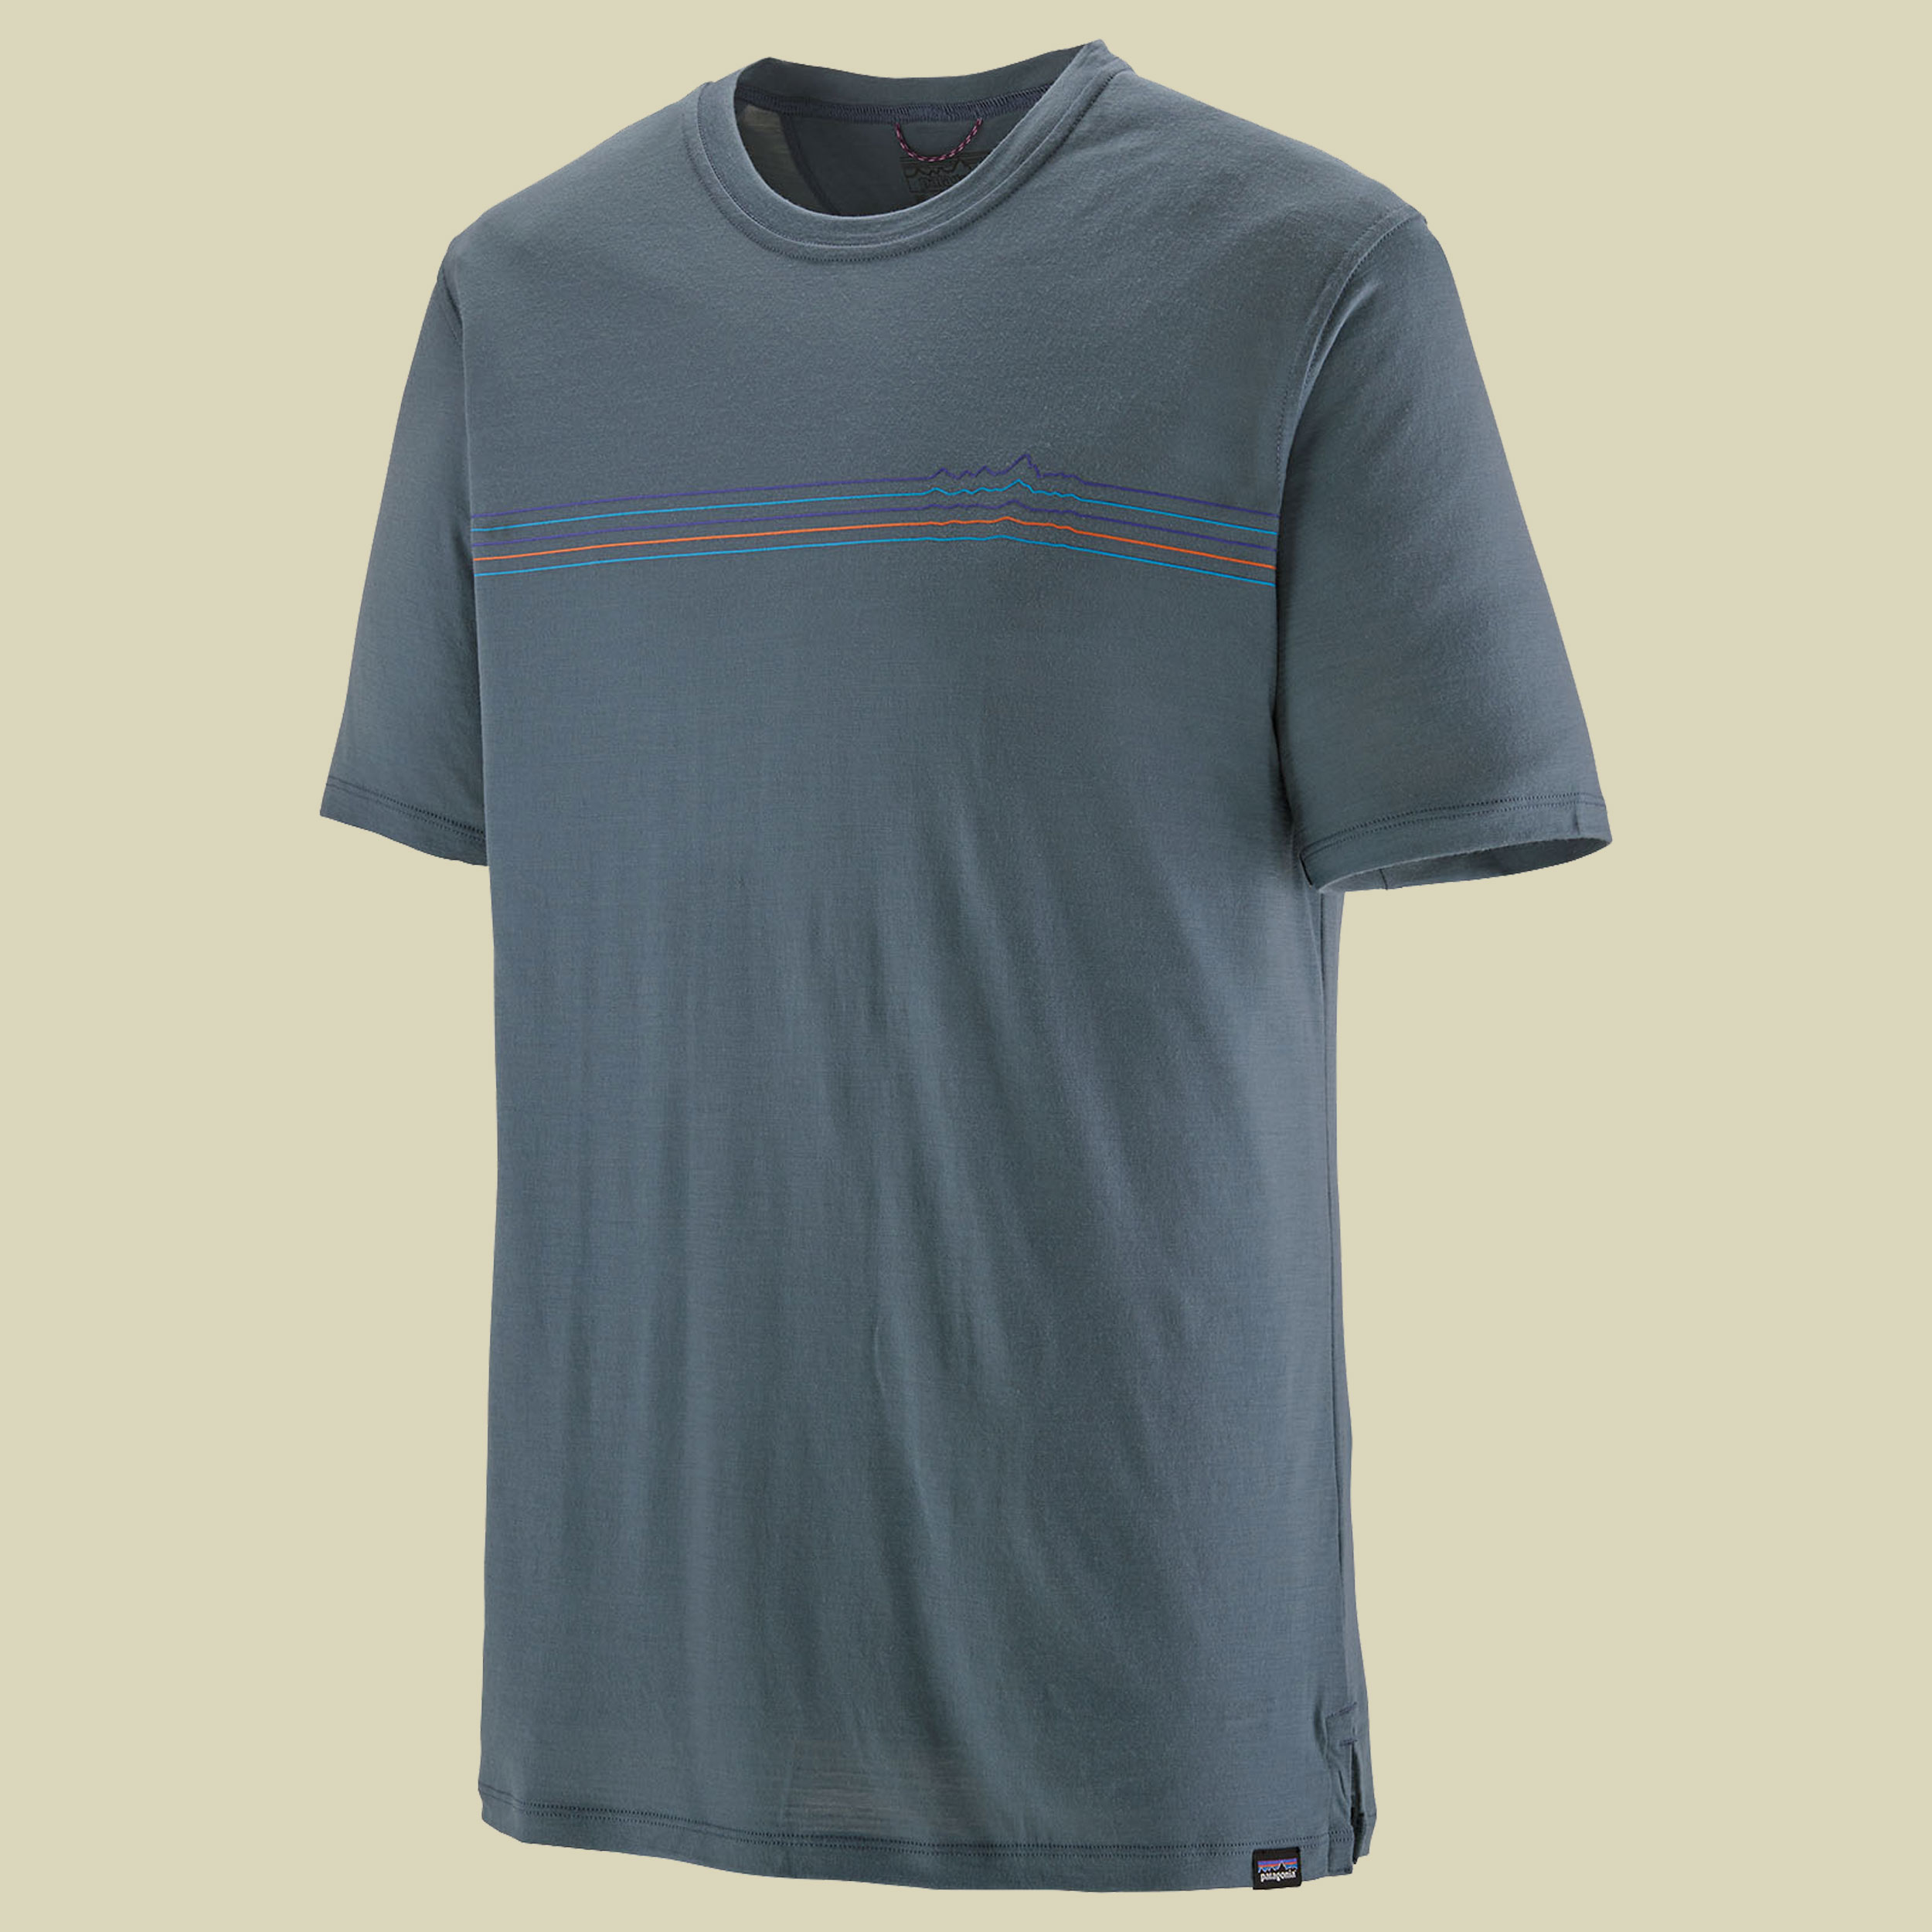 Cap Cool Merino Blend Graphic Shirt Men L blau - fitz roy fader:utility blue